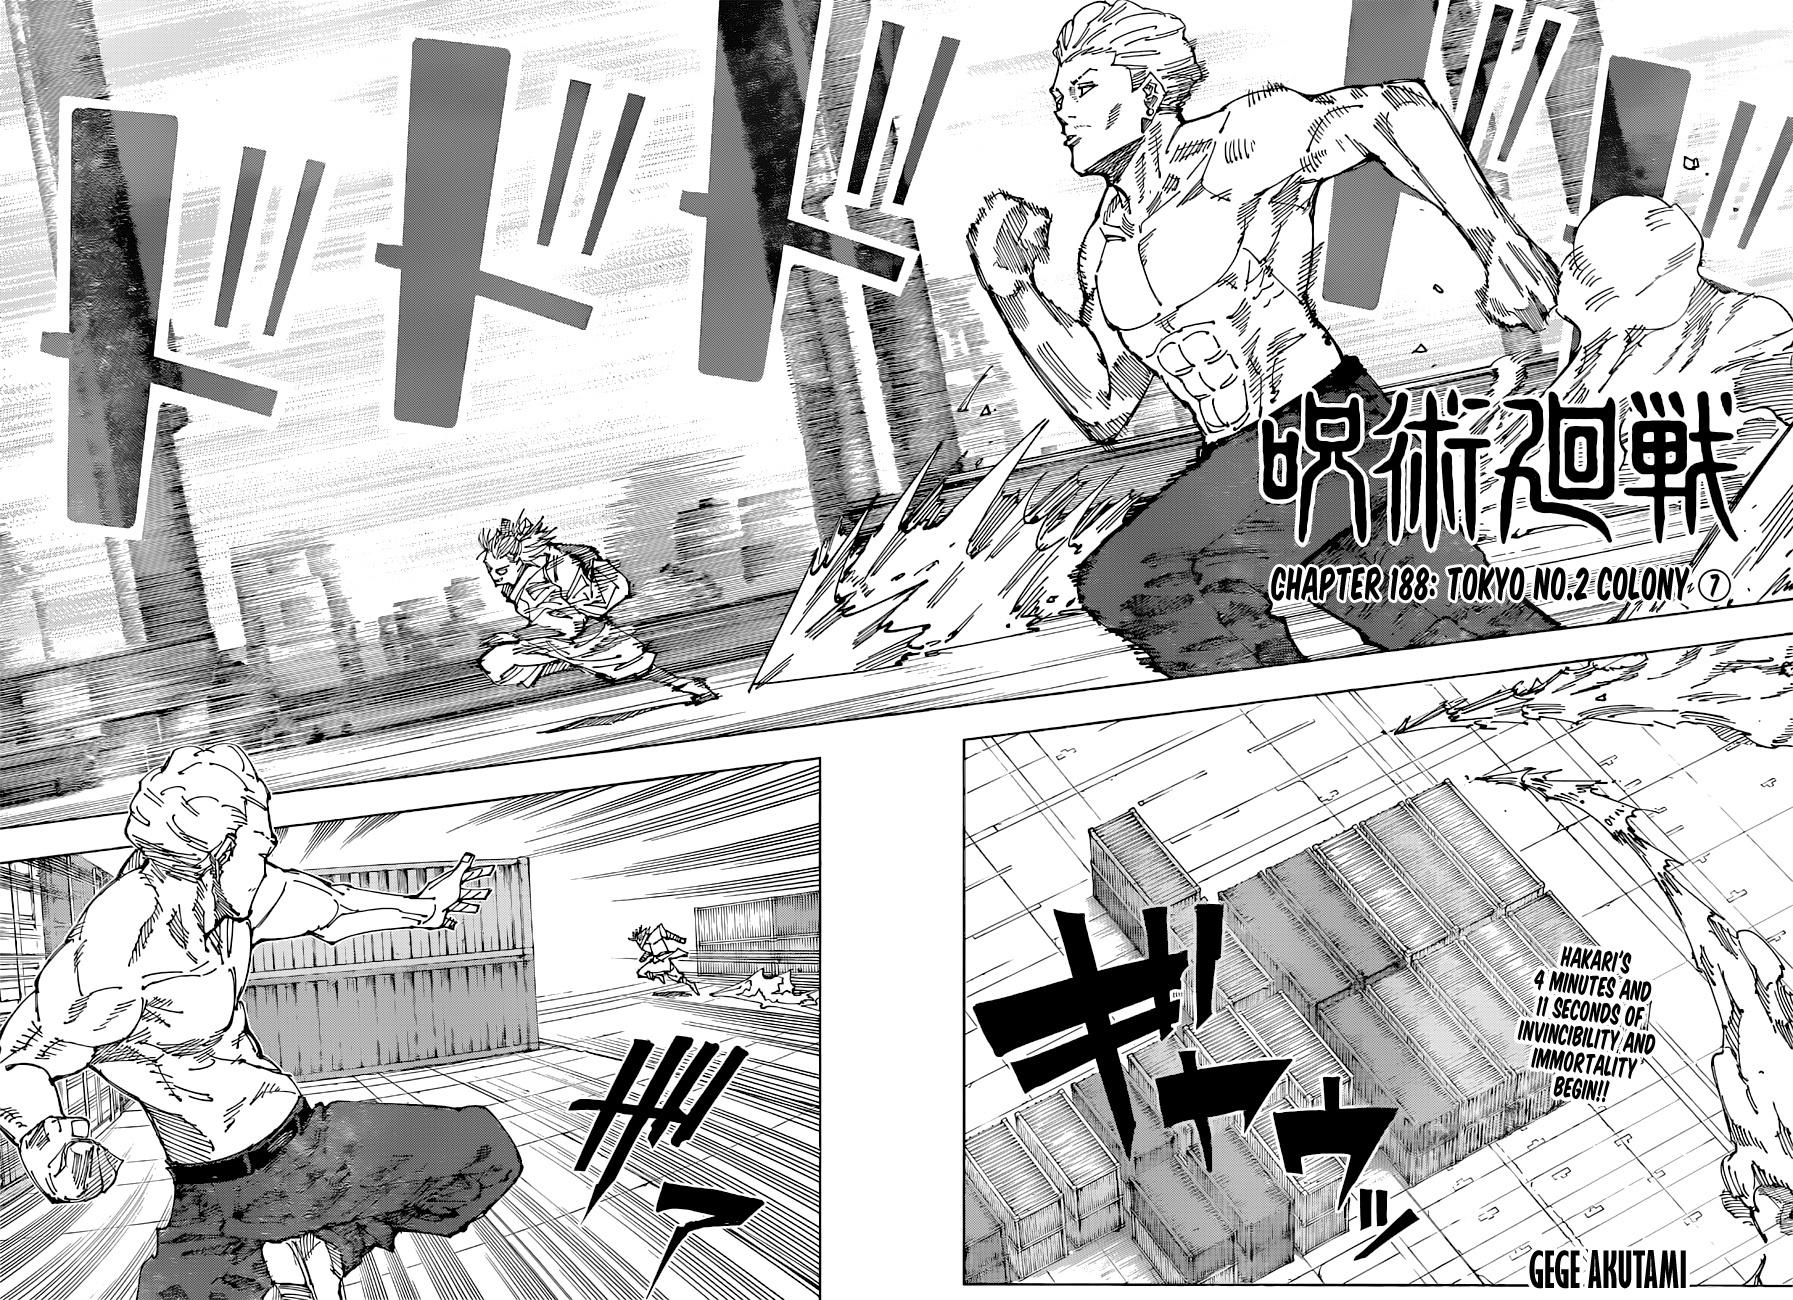 Jujutsu Kaisen Chapter 188: Tokyo No.2 Colony ⑦ page 3 - Mangakakalot